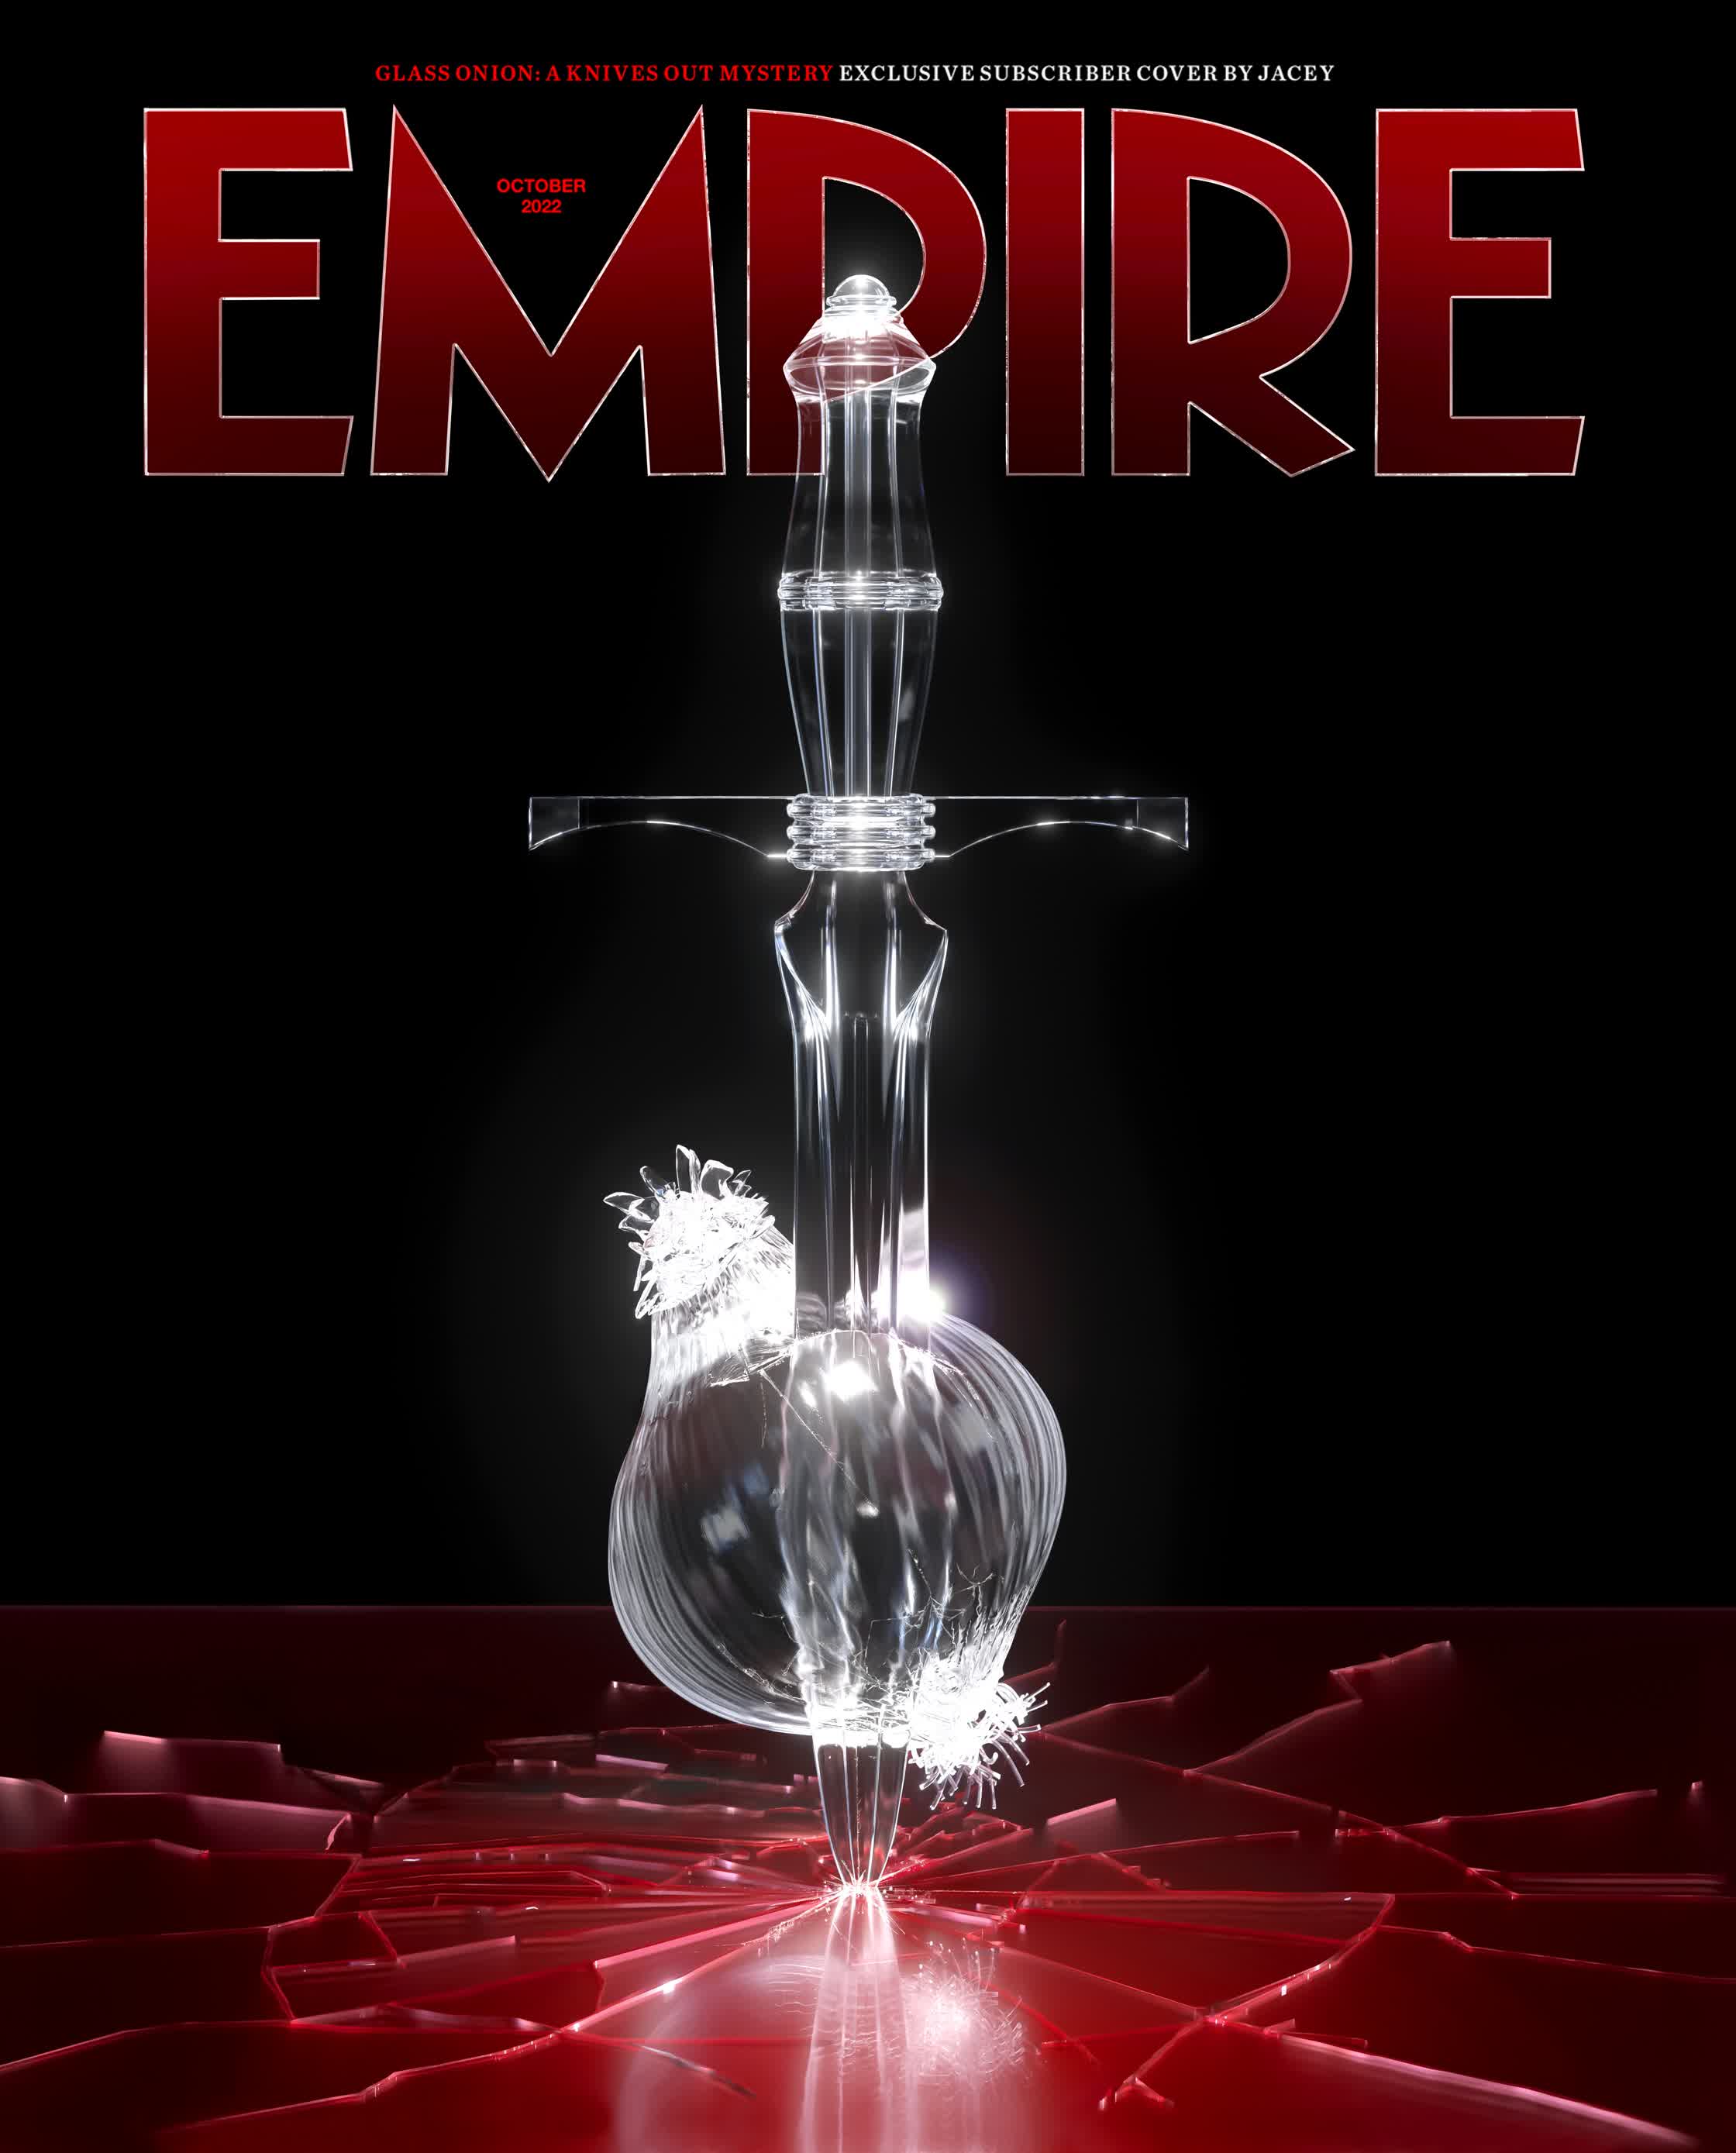 brighter_empire_knifes cover.jpg